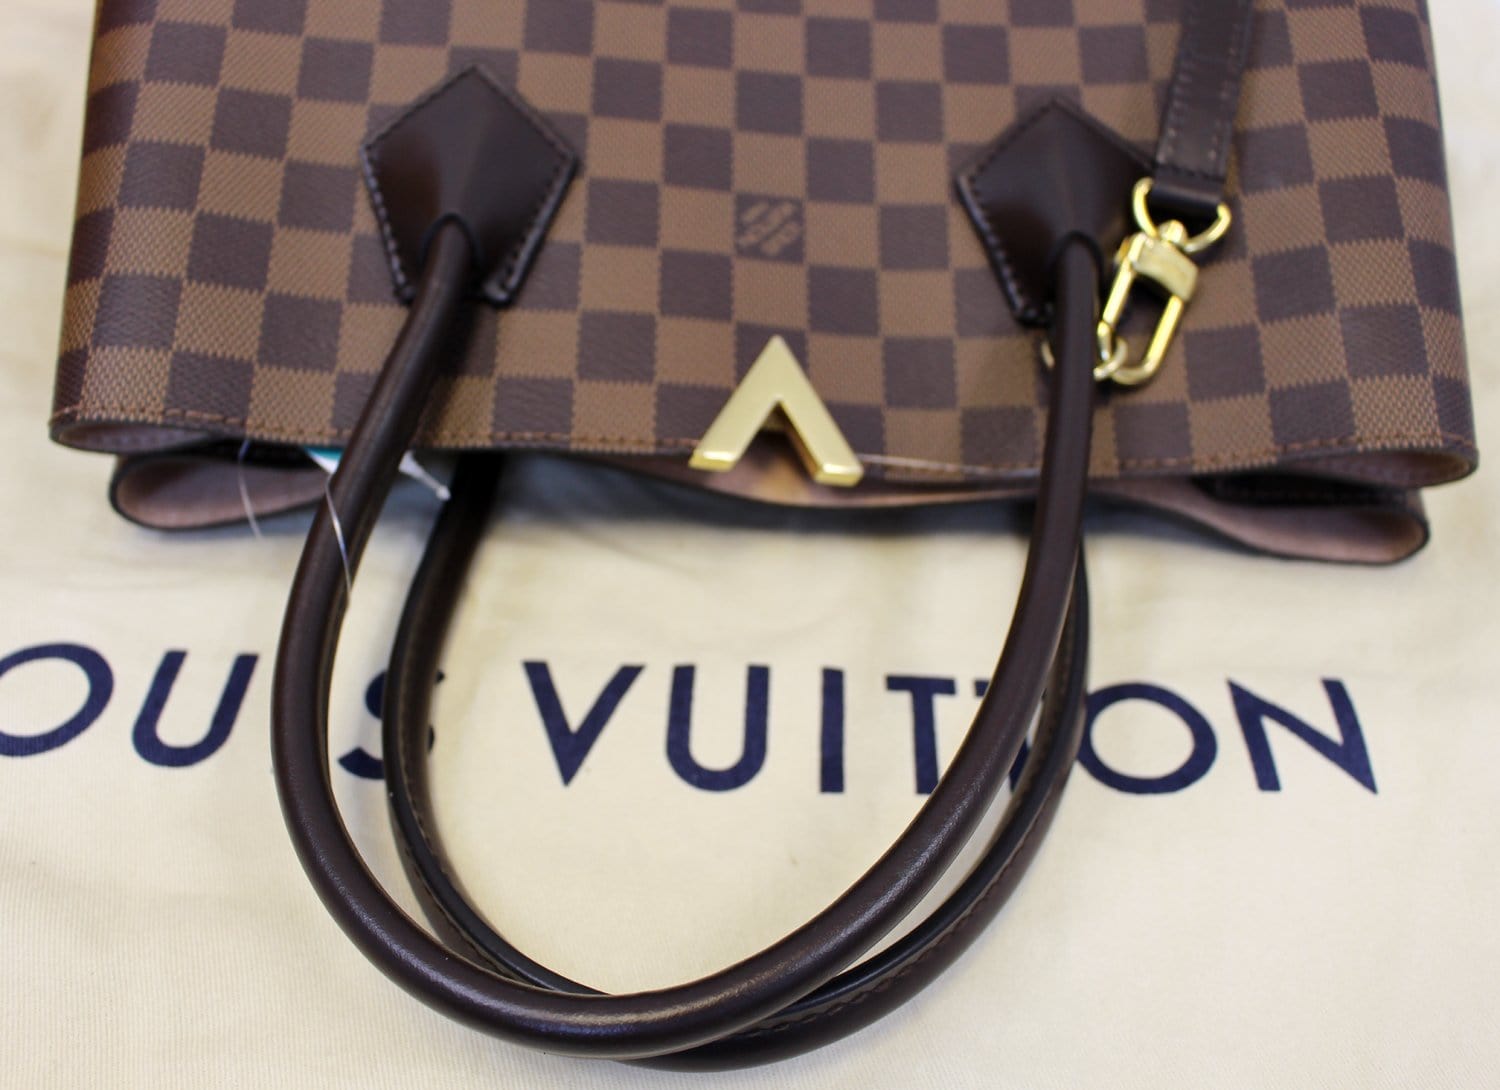 Louis Vuitton Kensington Damier Ebene 2018 Size 33.5x14.5x26.5cm with Bag,  Strap, Dustbag and Paperbag Harga 15.000.000 #lvkensington